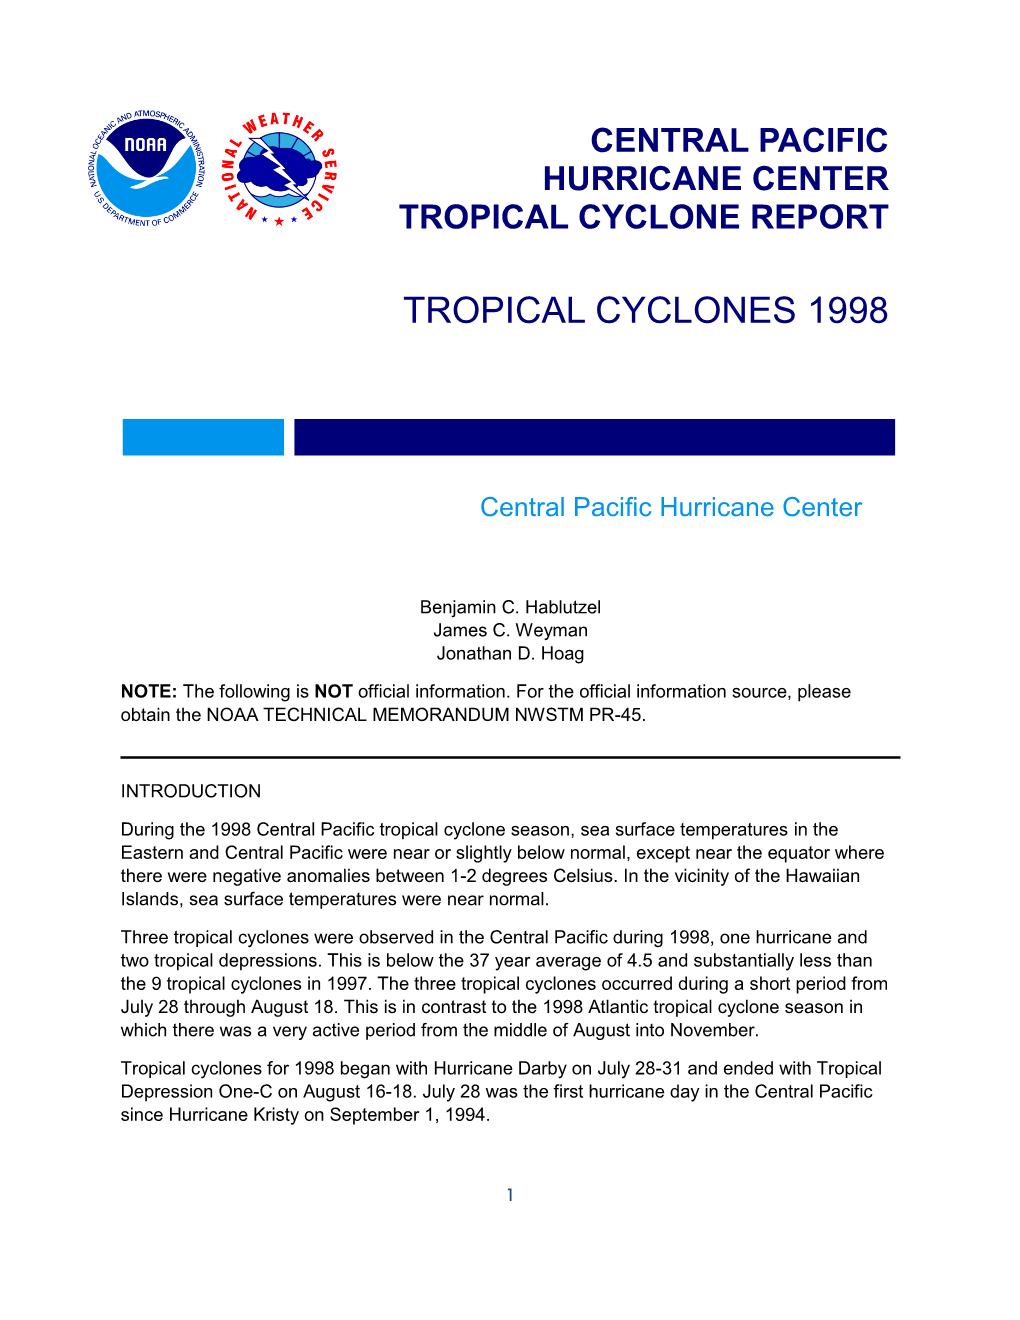 Tropical Cyclones 1998